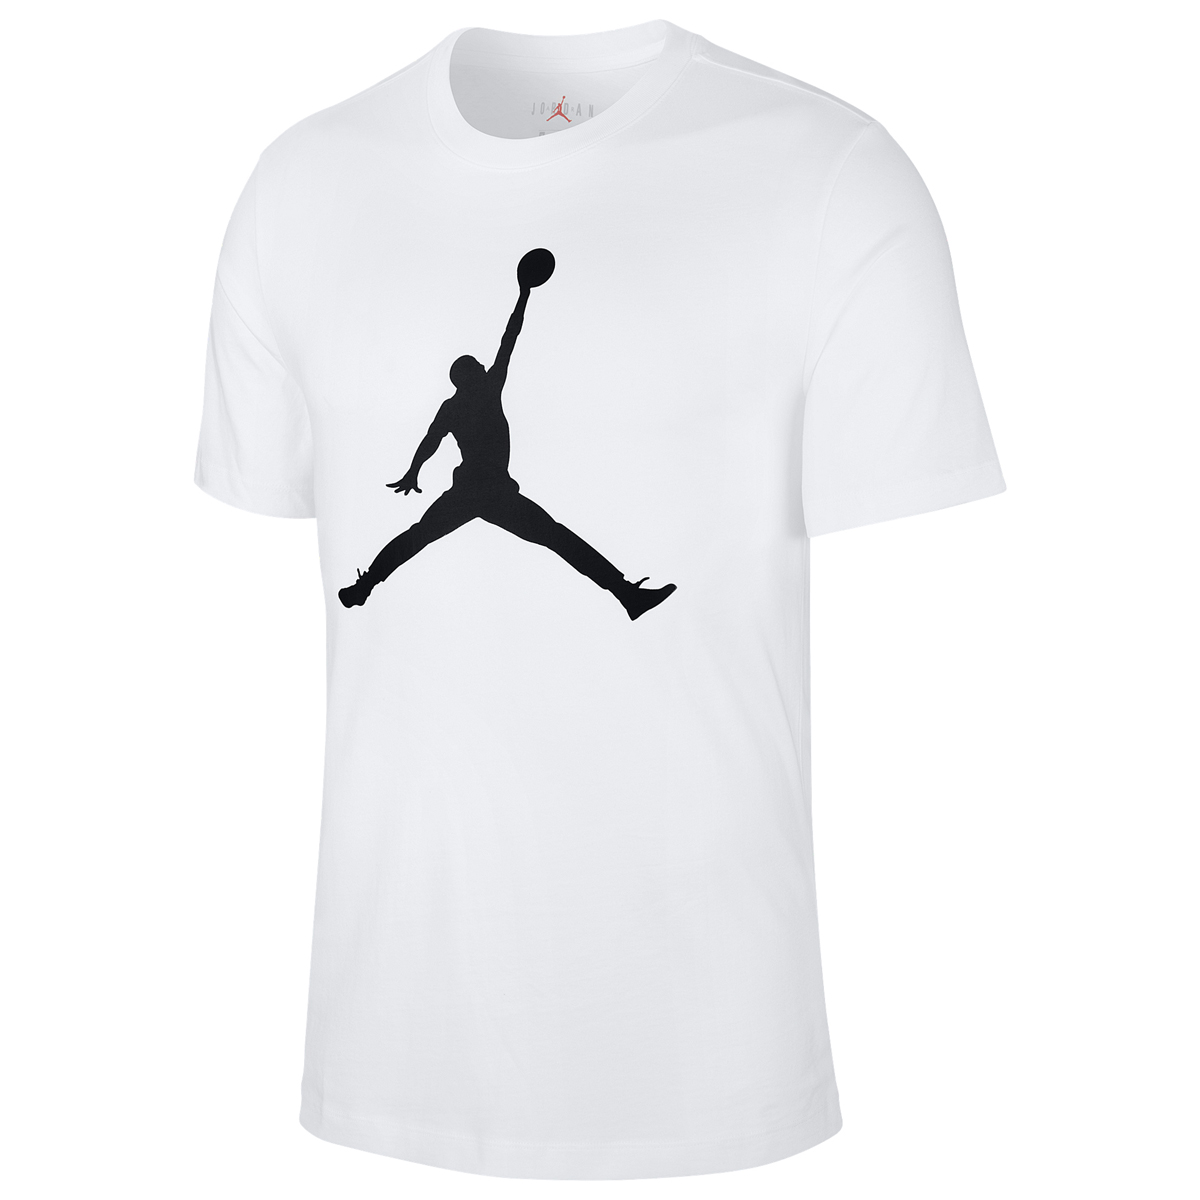 Jordan-Jumpman-T-Shirt-White-Black